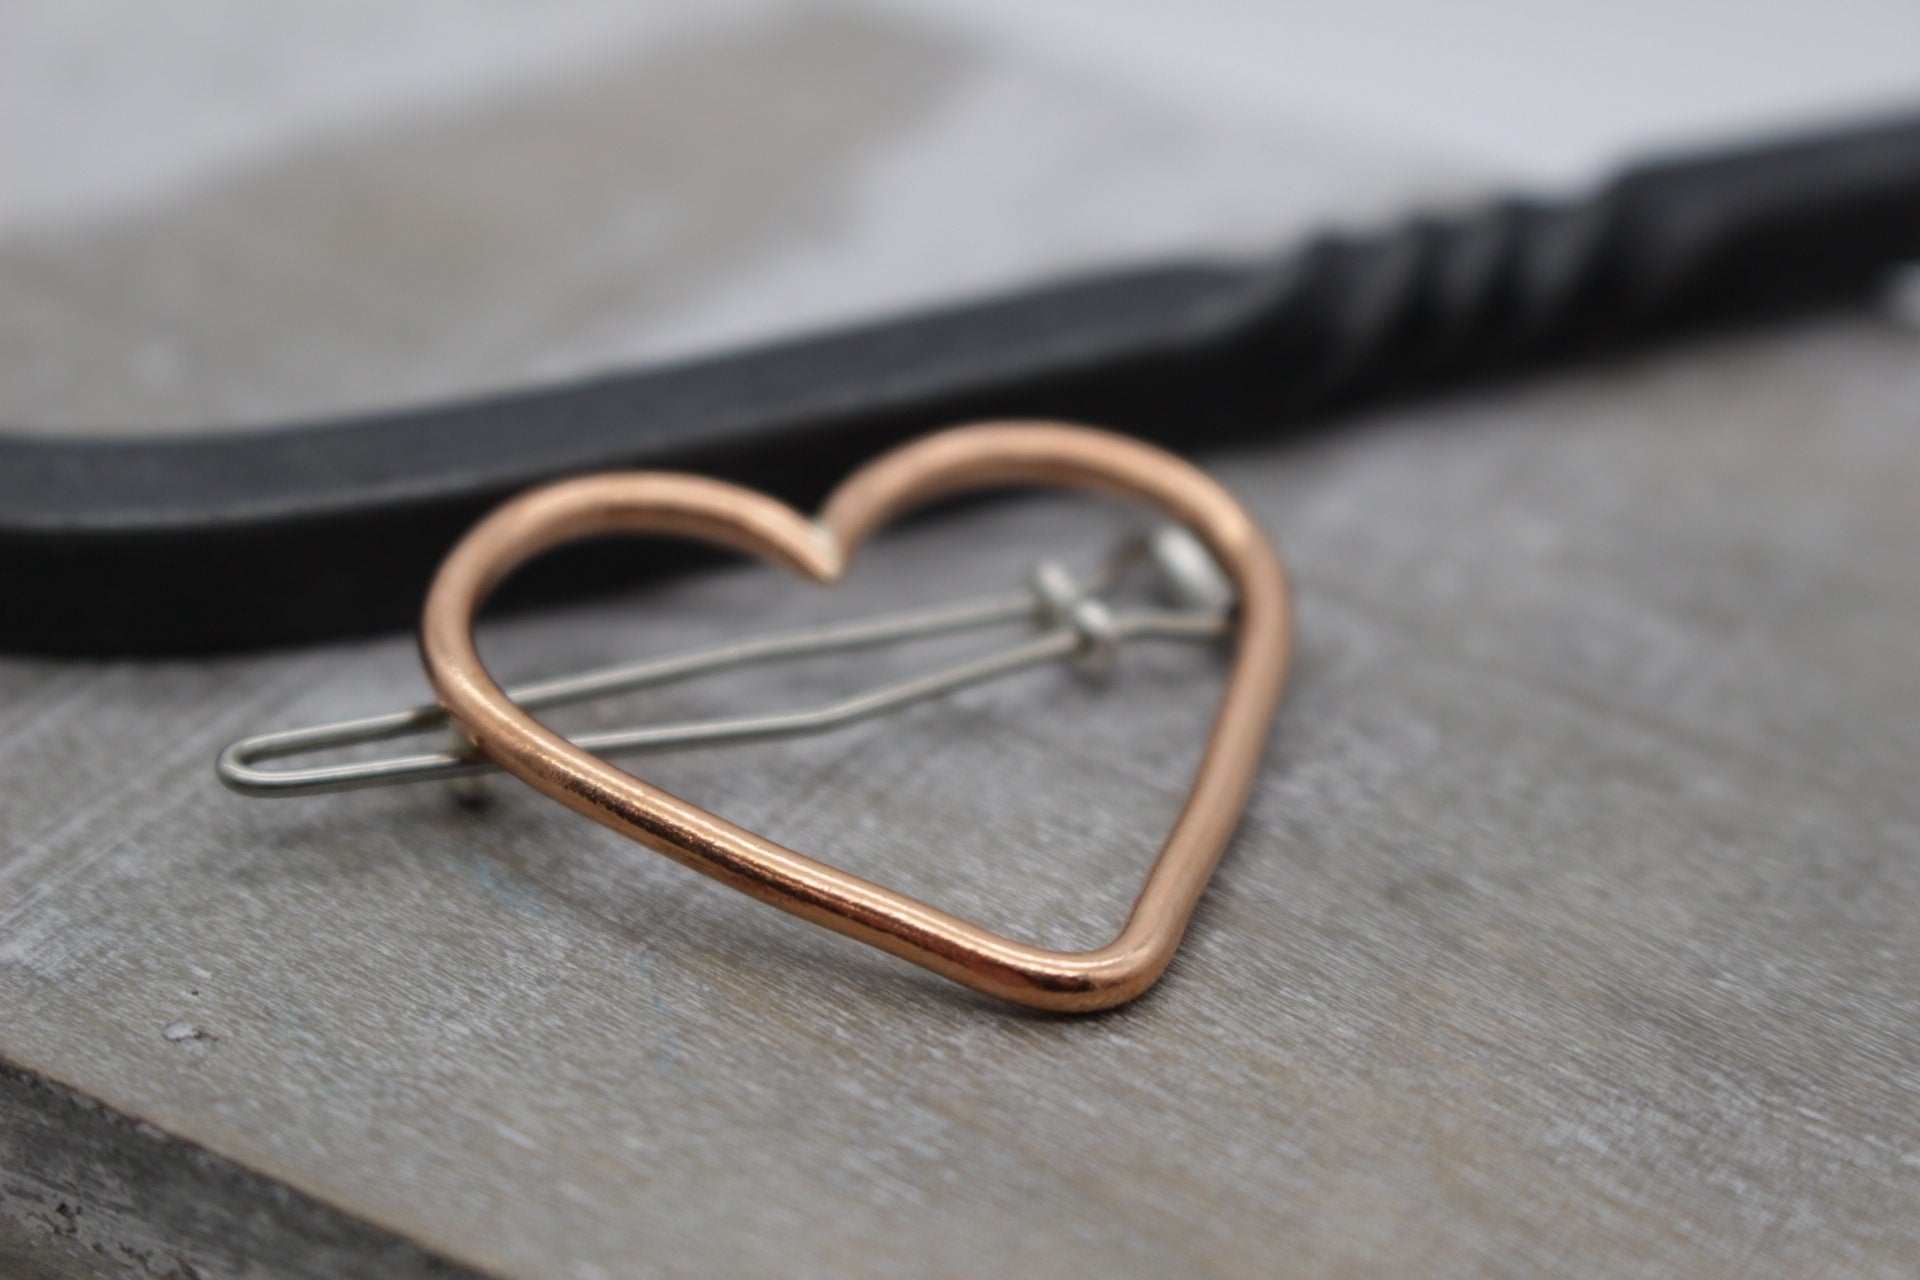 Small Copper heart  Barrette - Gift for Her - Girls Barrette - short hair barrette - Hair Jewelry